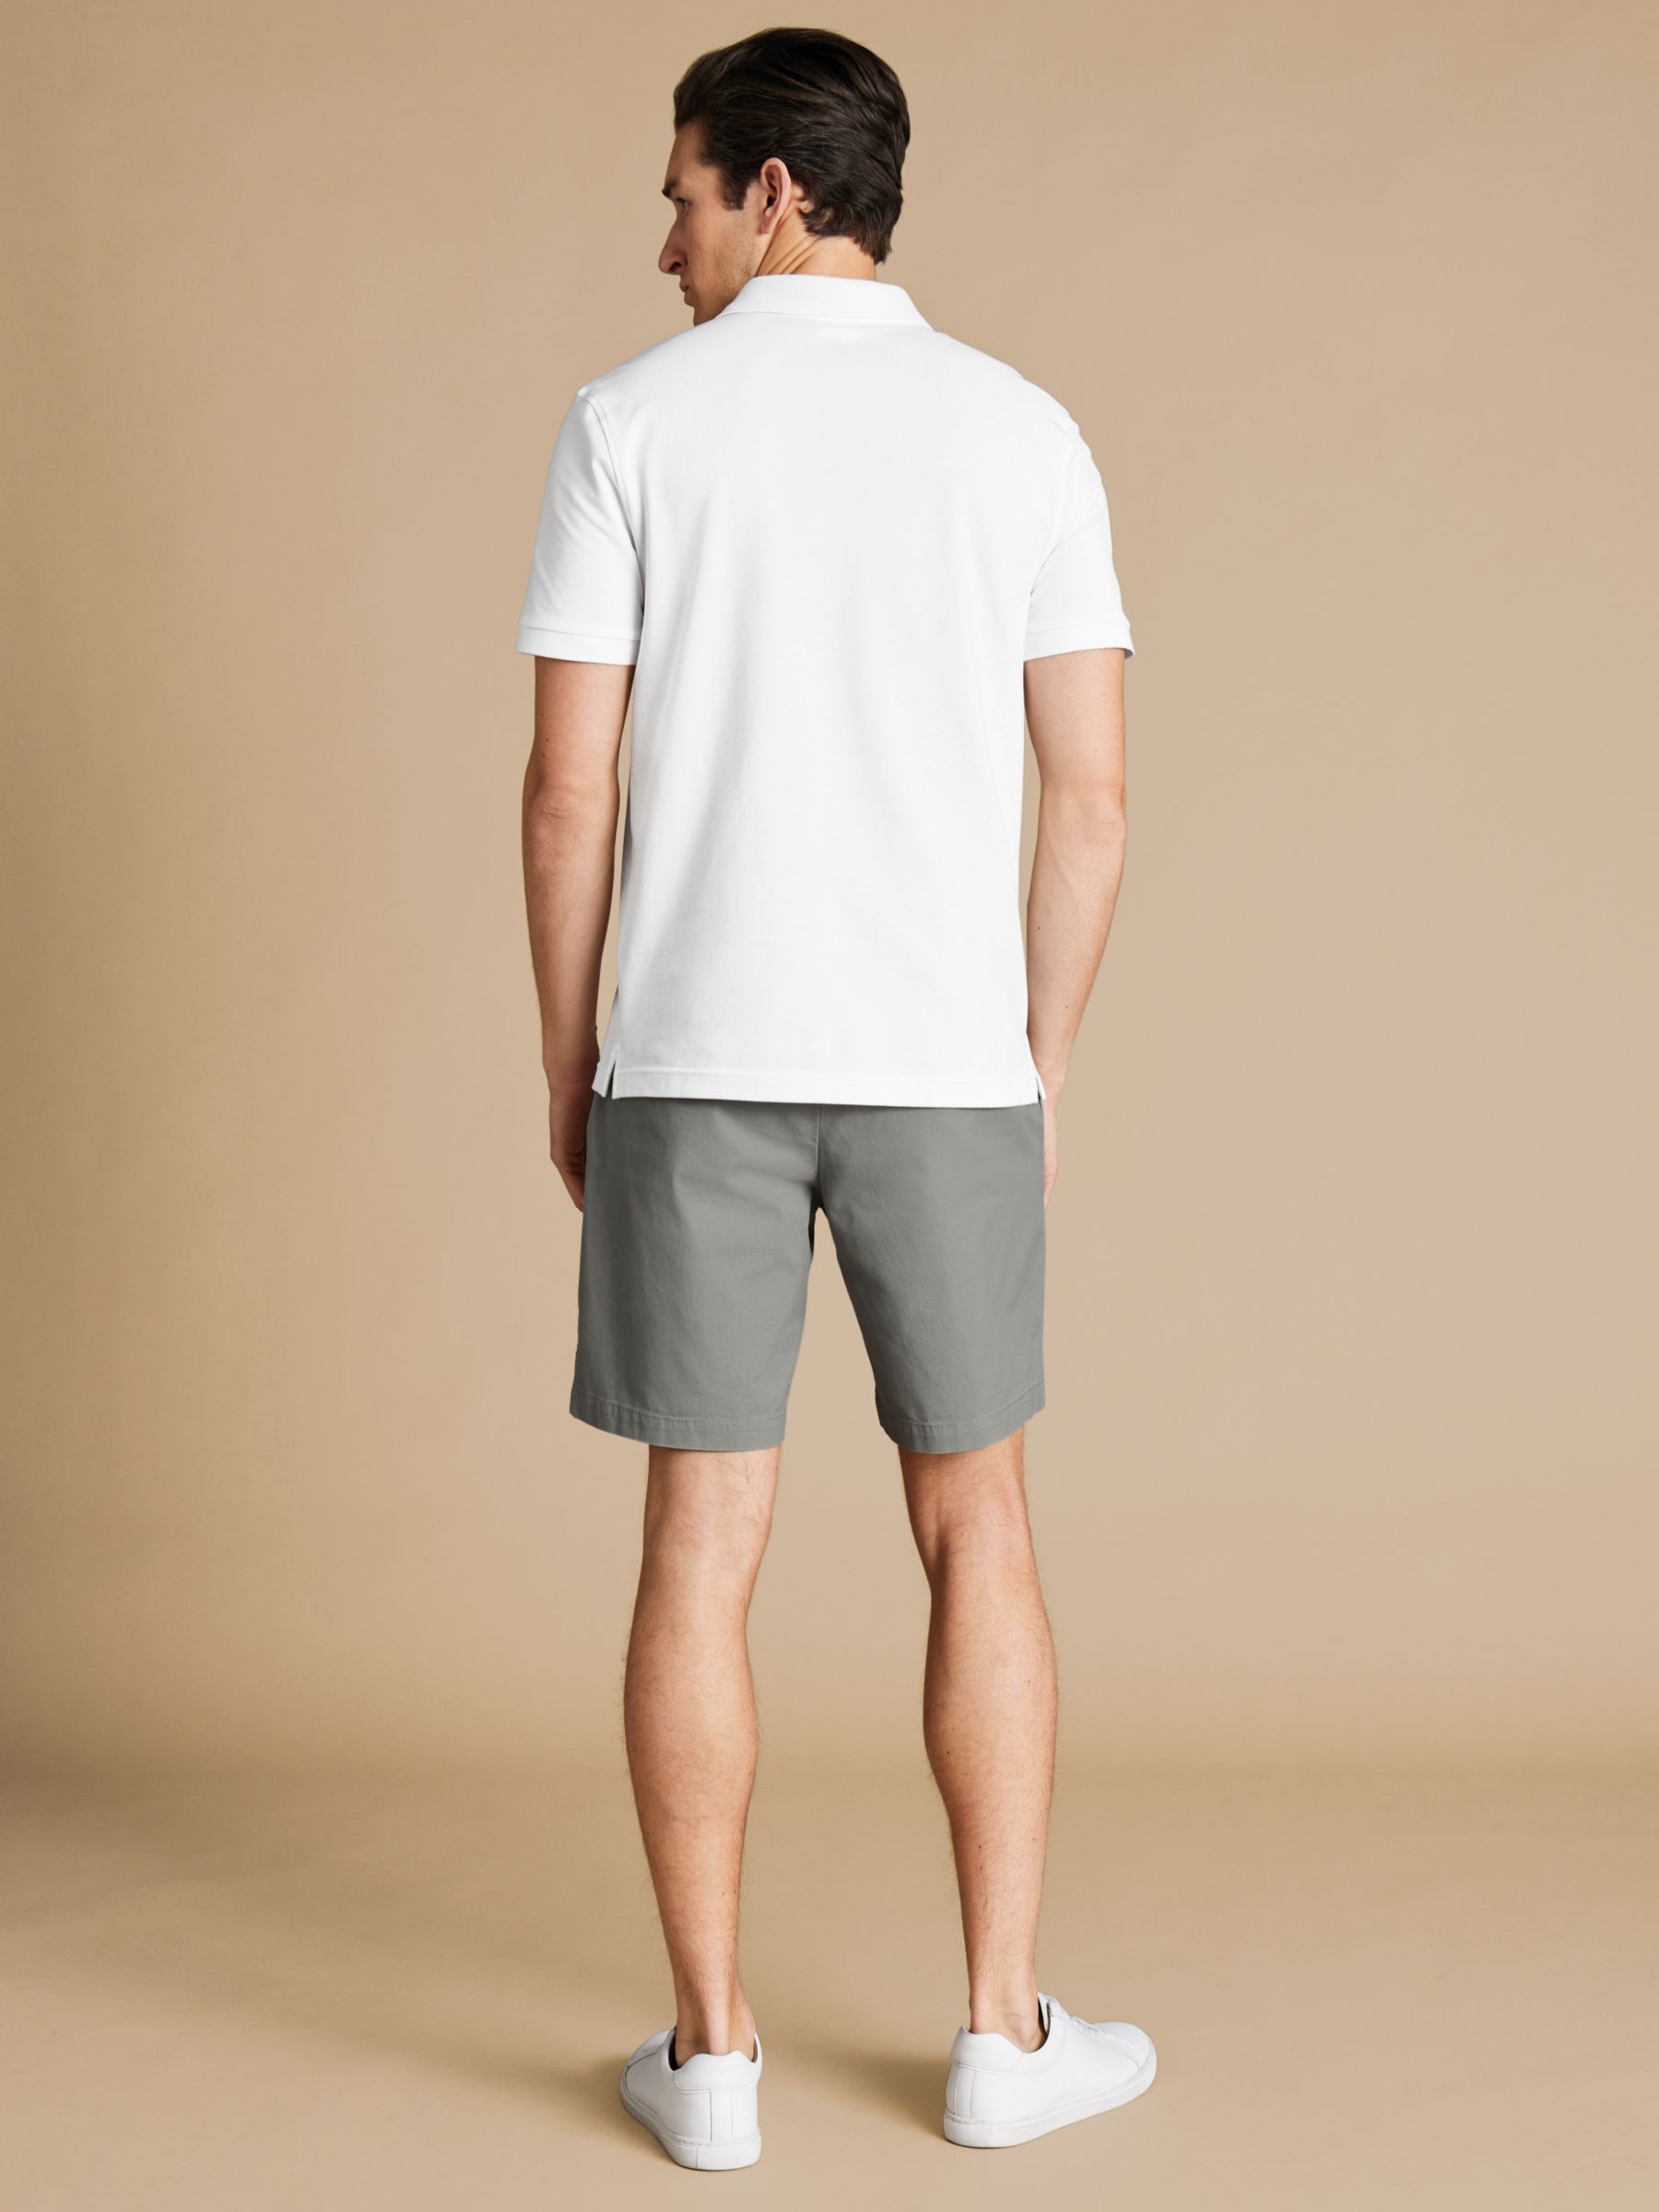 Charles Tyrwhitt Cotton Stretch Chino Shorts, Light Grey, 36